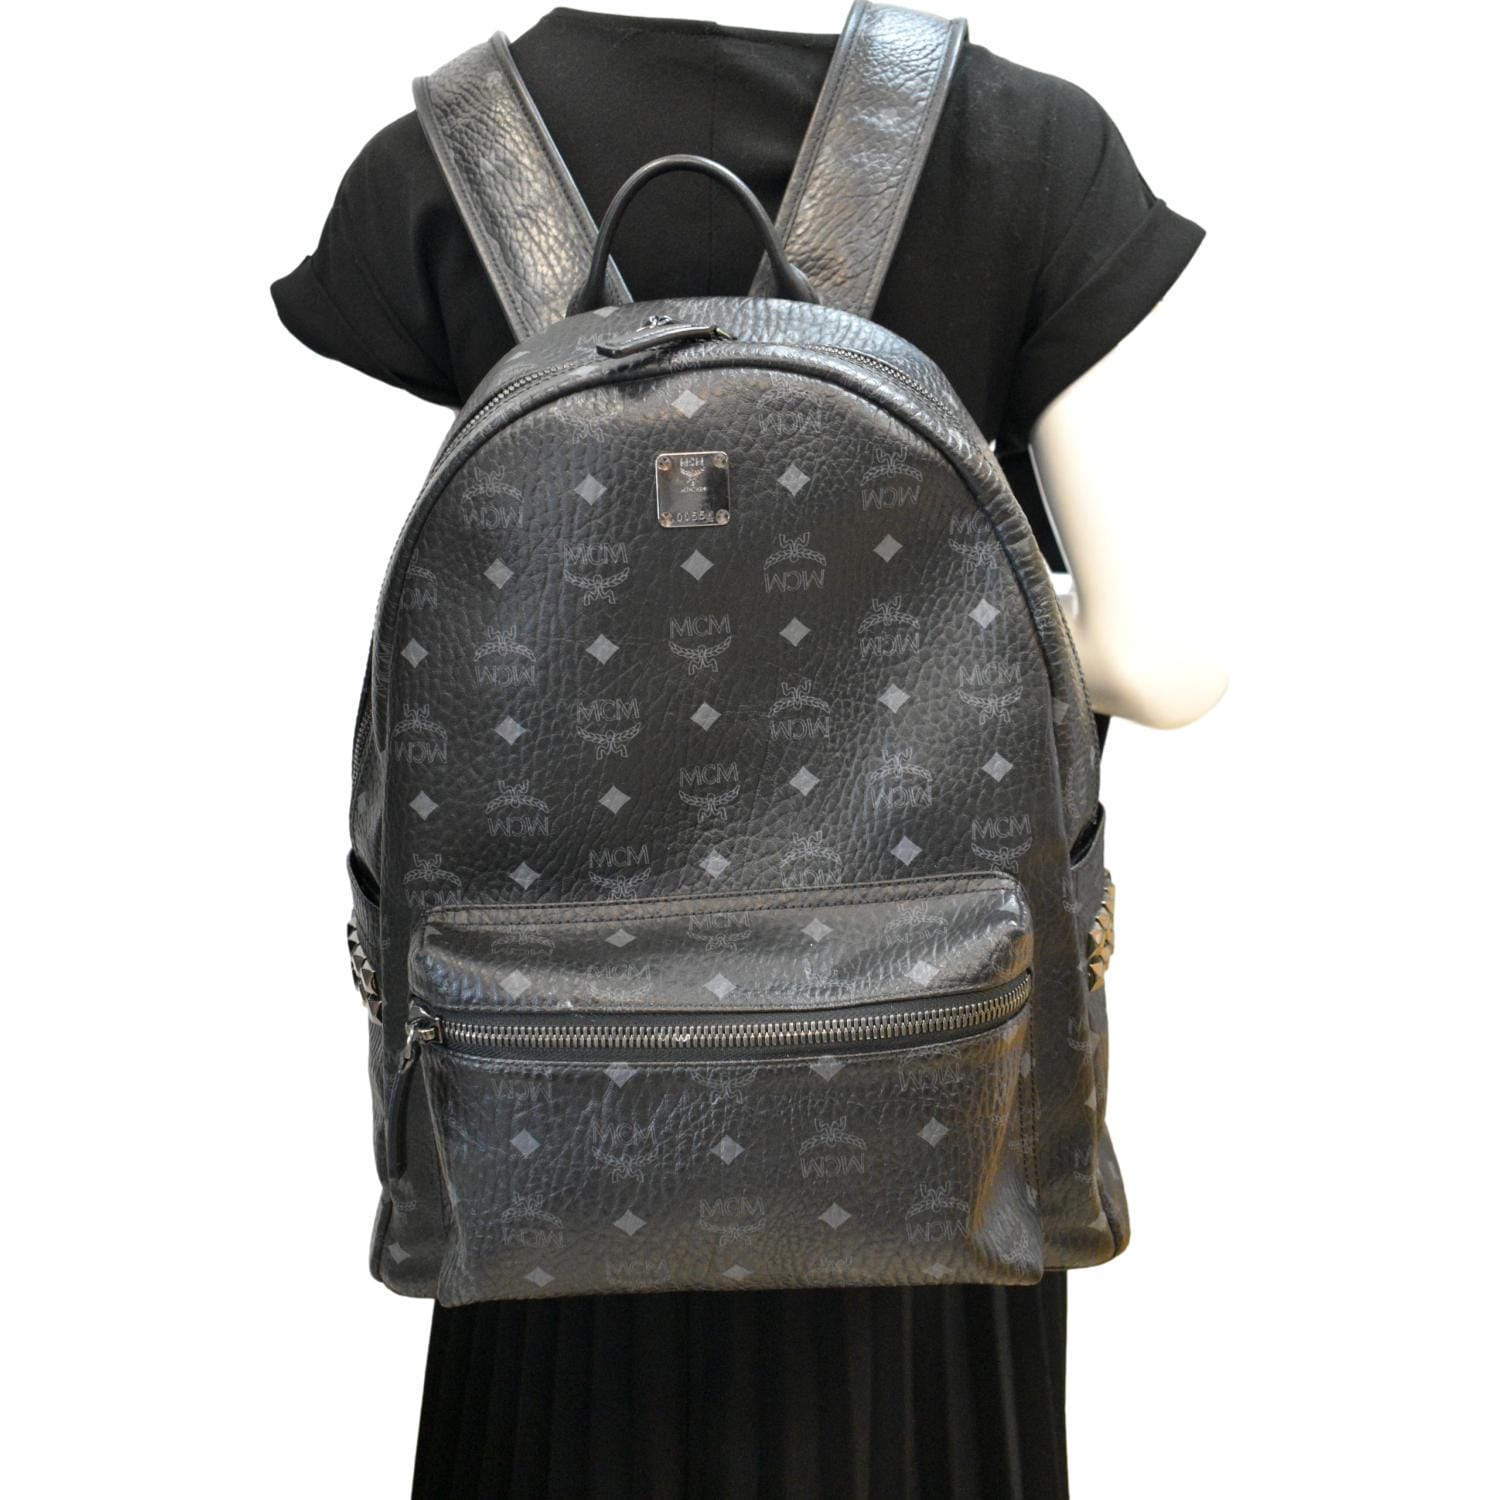 MCM Monogram Visetos Stark Large Backpack - Consigned Designs